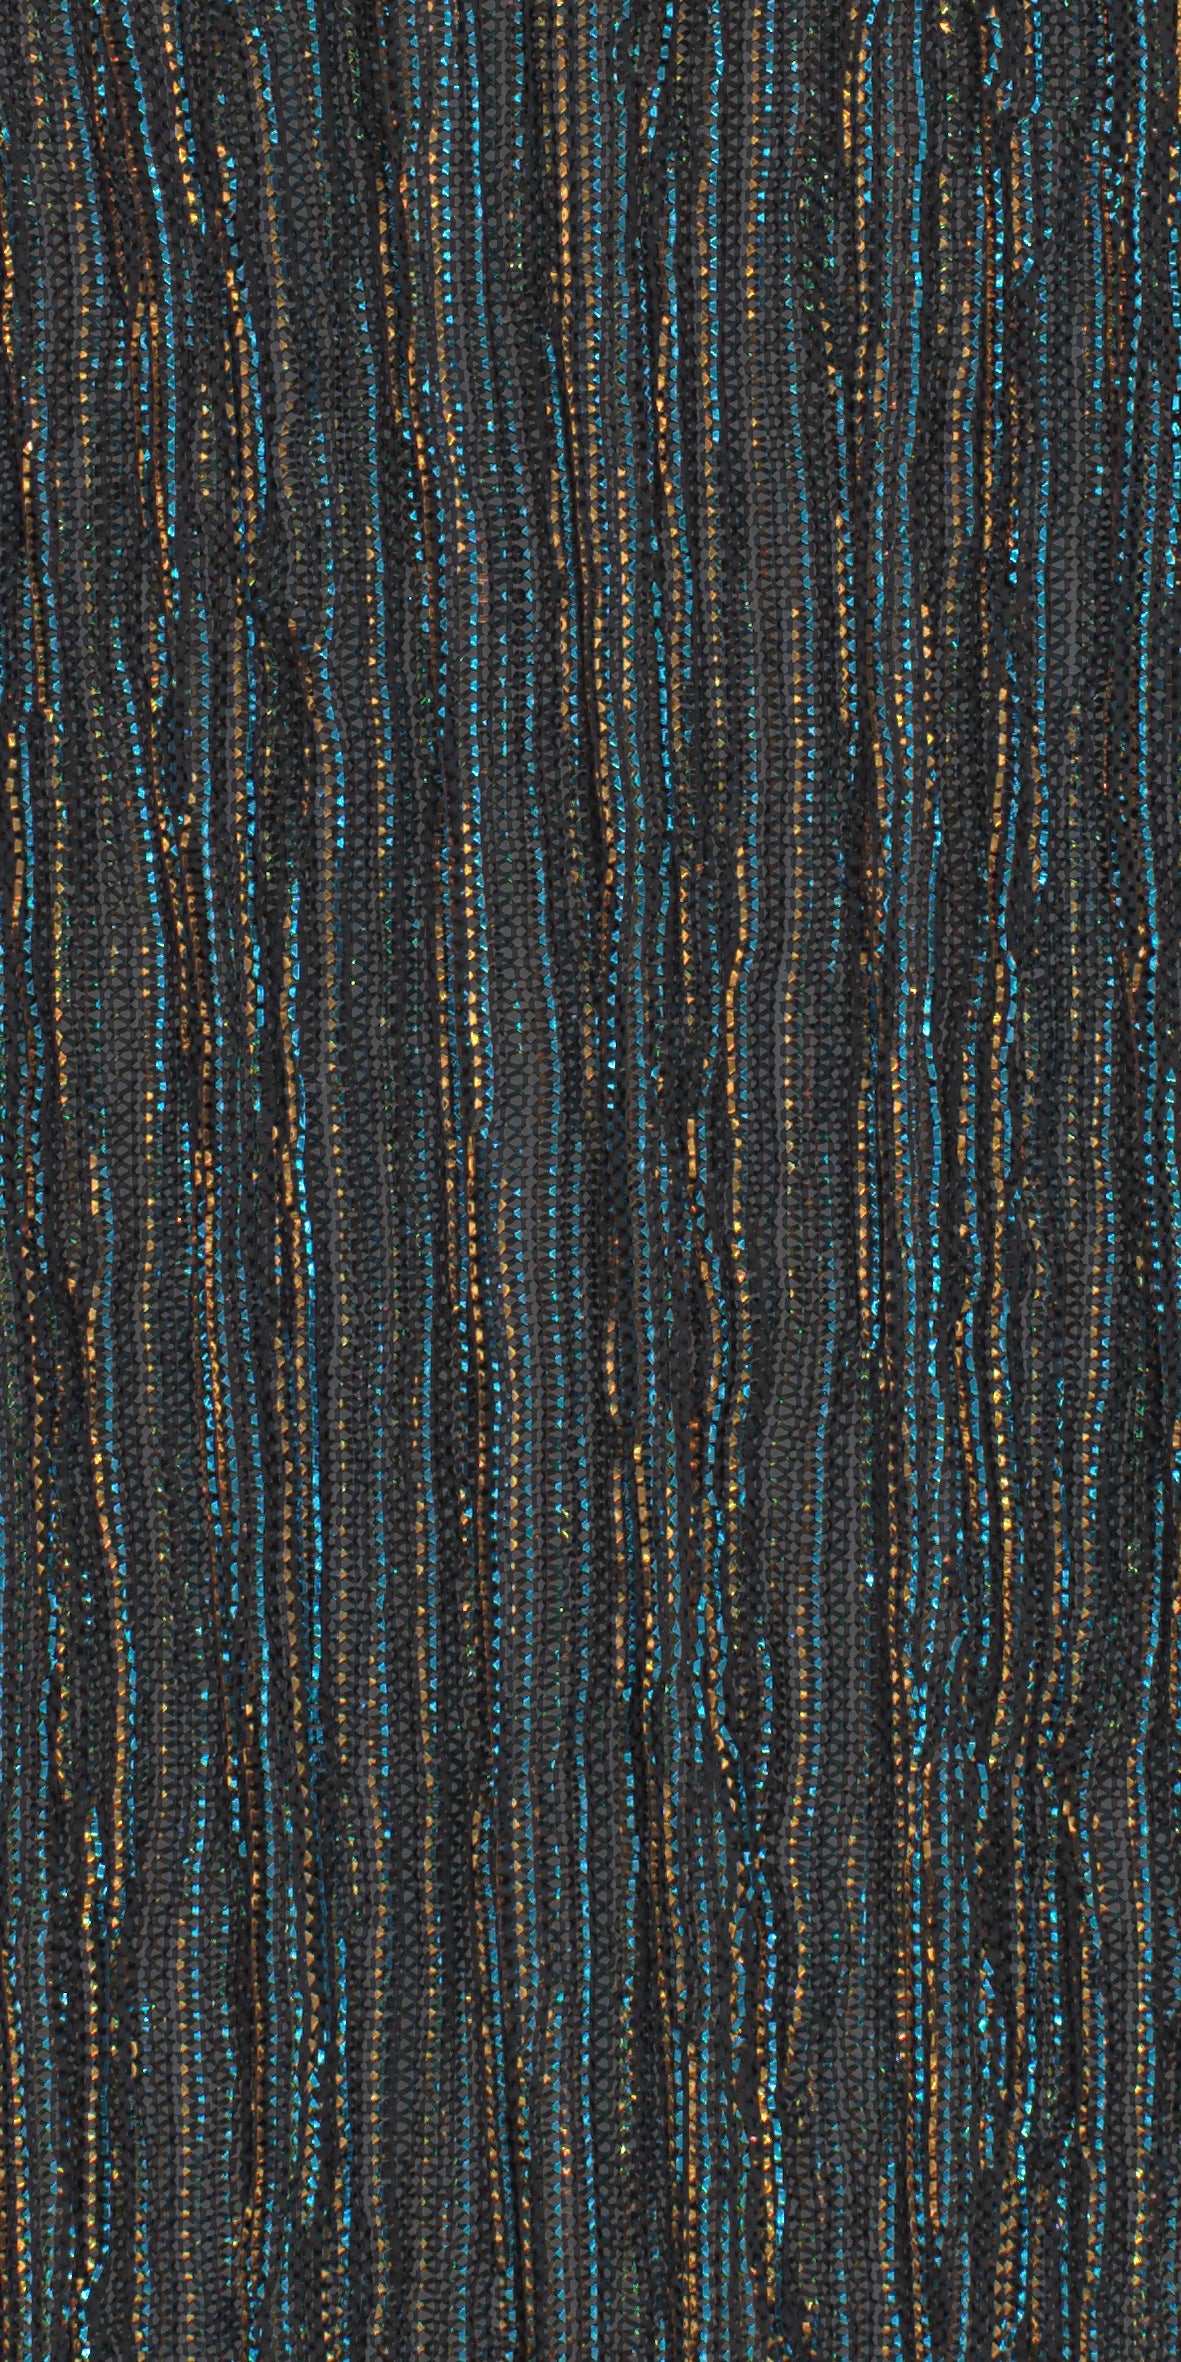 12006-21 Black Green Gold Metallic Pleat Plain Dyed Blend 126g/yd 56" black blend gold green knit metallic plain dyed pleat ppl new Metallic, Pleat - knit fabric - woven fabric - fabric company - fabric wholesale - fabric b2b - fabric factory - high quality fabric - hong kong fabric - fabric hk - acetate fabric - cotton fabric - linen fabric - metallic fabric - nylon fabric - polyester fabric - spandex fabric - chun wing hing - cwh hk - fabric worldwide ship - 針織布 - 梳織布 - 布料公司- 布料批發 - 香港布料 - 秦榮興